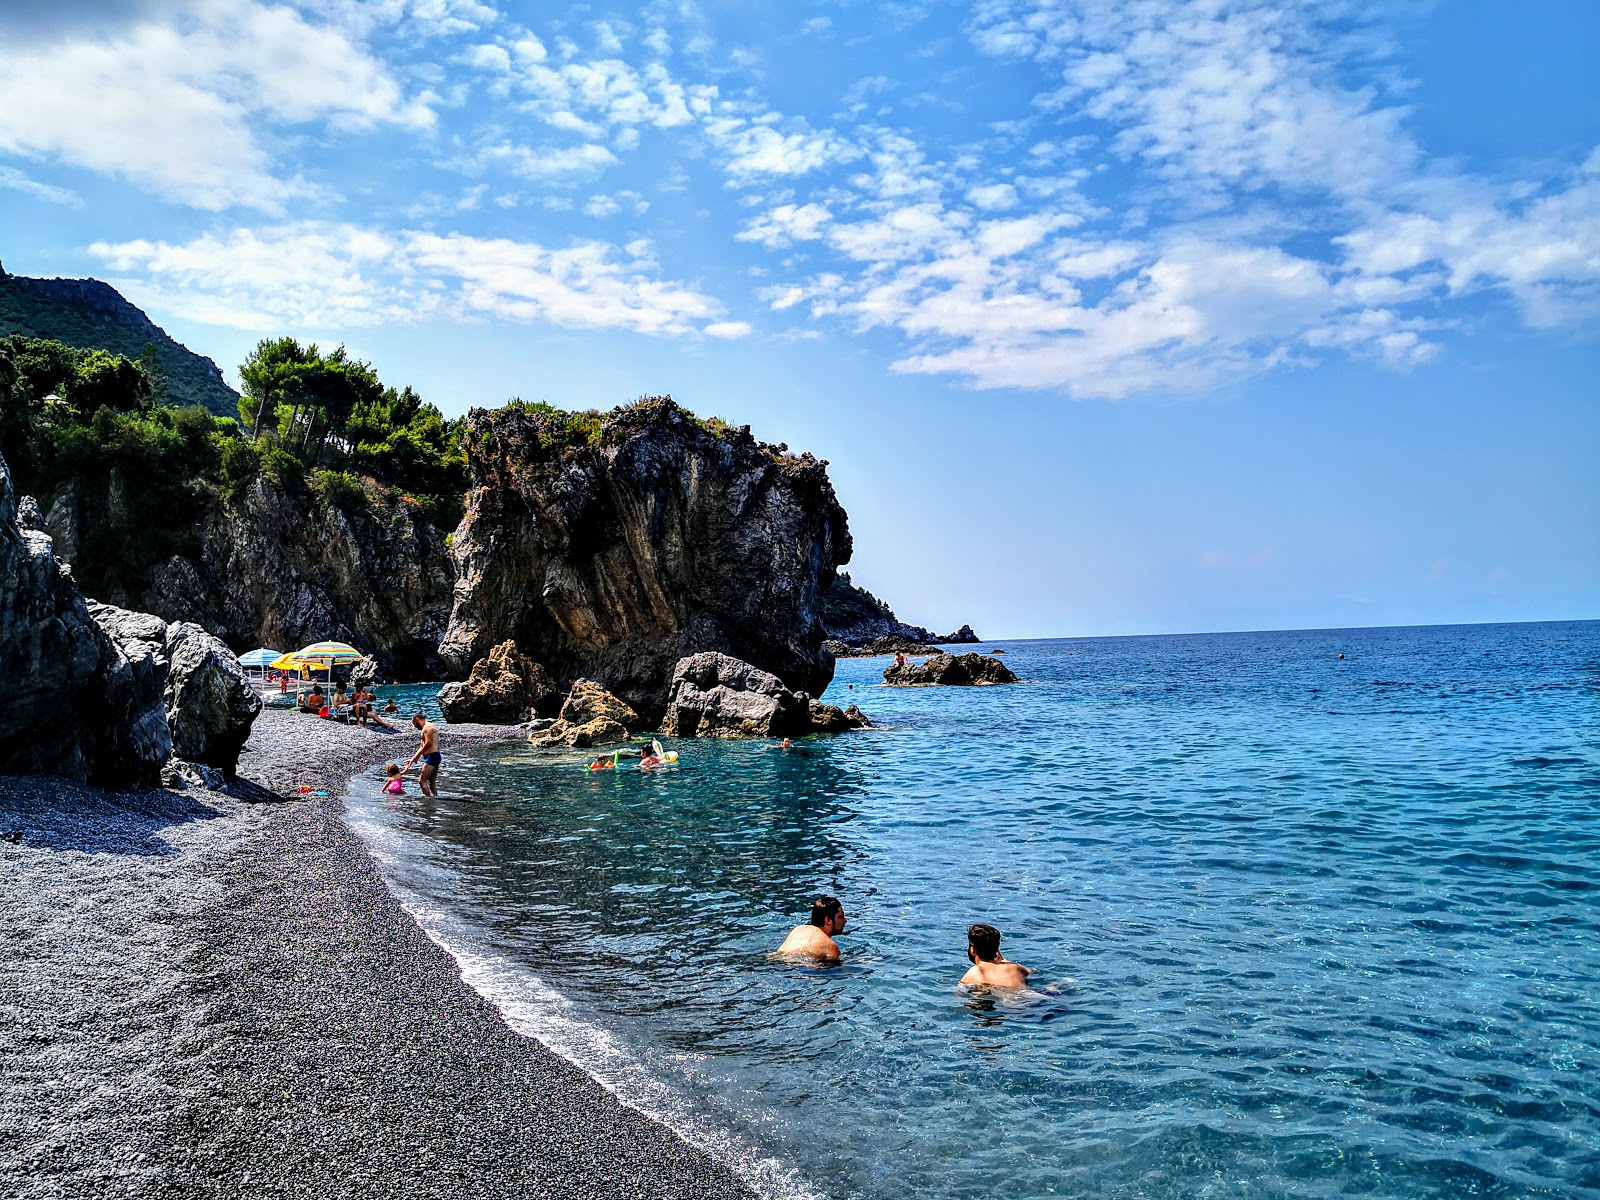 Photo of Spiaggia di Santa Teresa with gray fine pebble surface